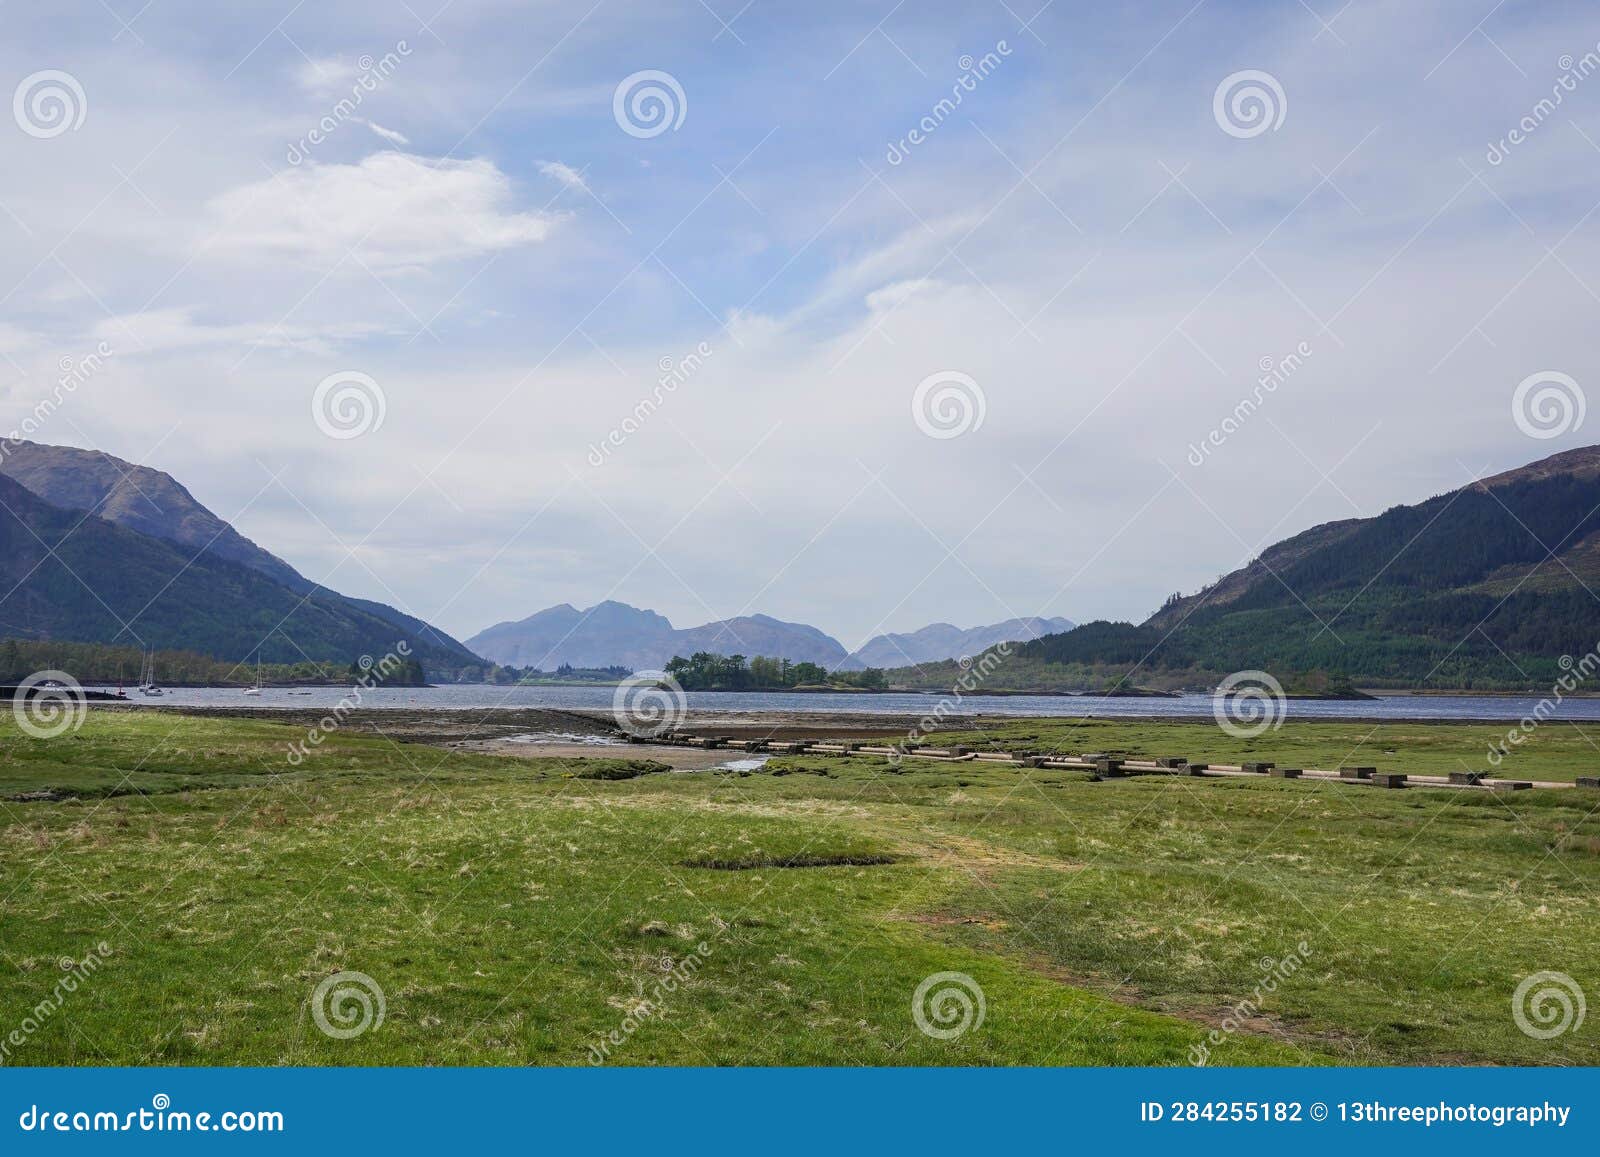 Loch Leven Seen from Glencoe in Scotland Stock Photo - Image of ...